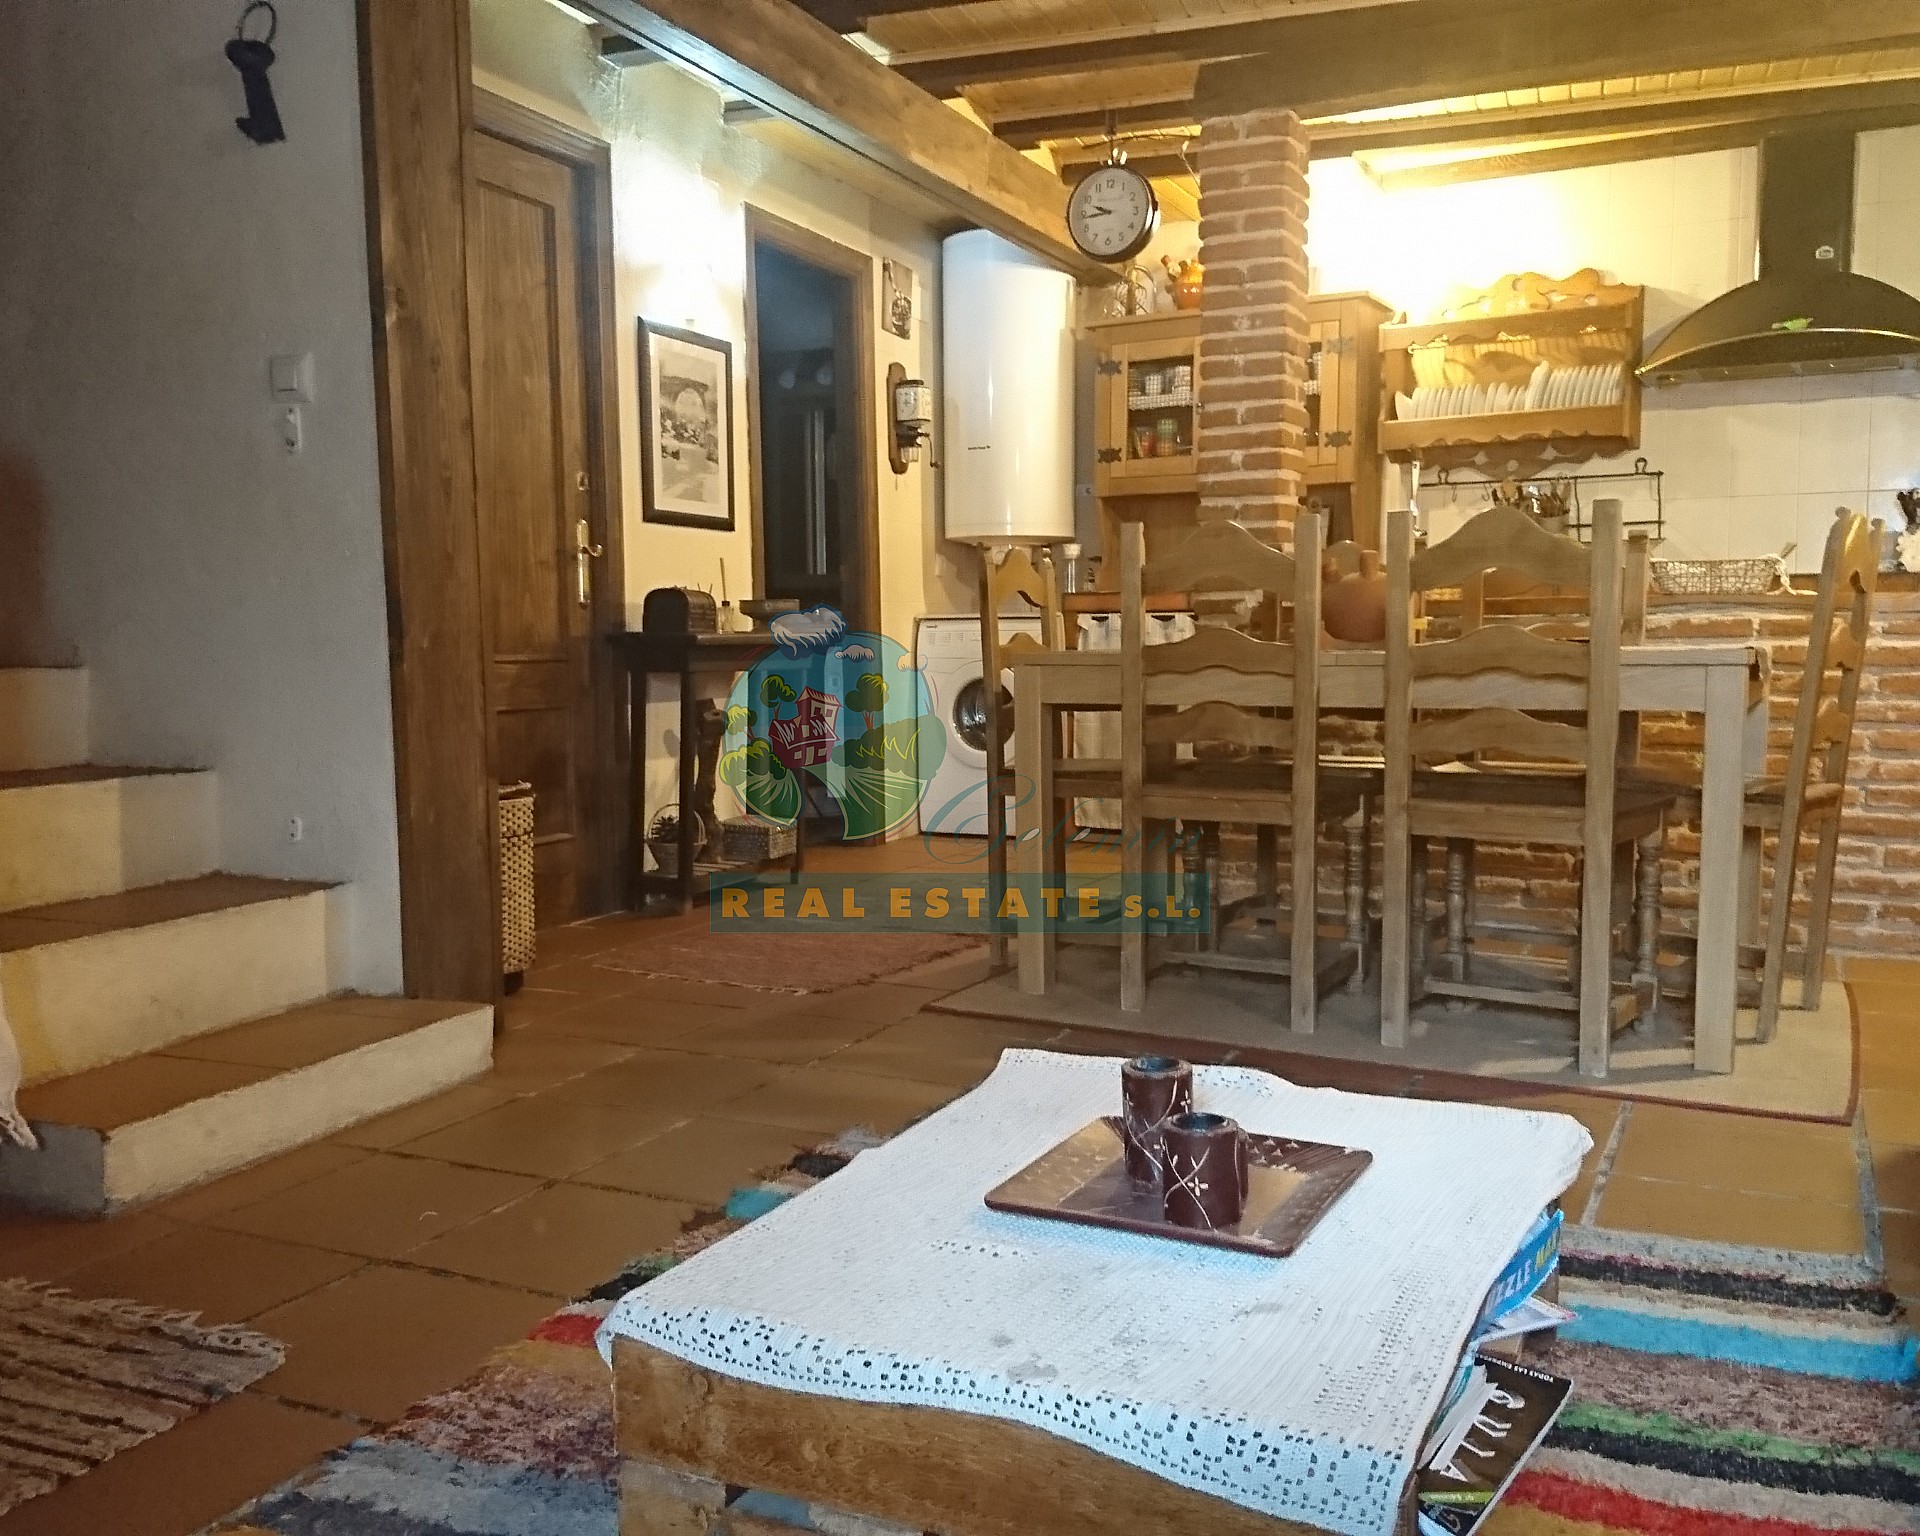 4 rural guest house in Sierra de Gredos.